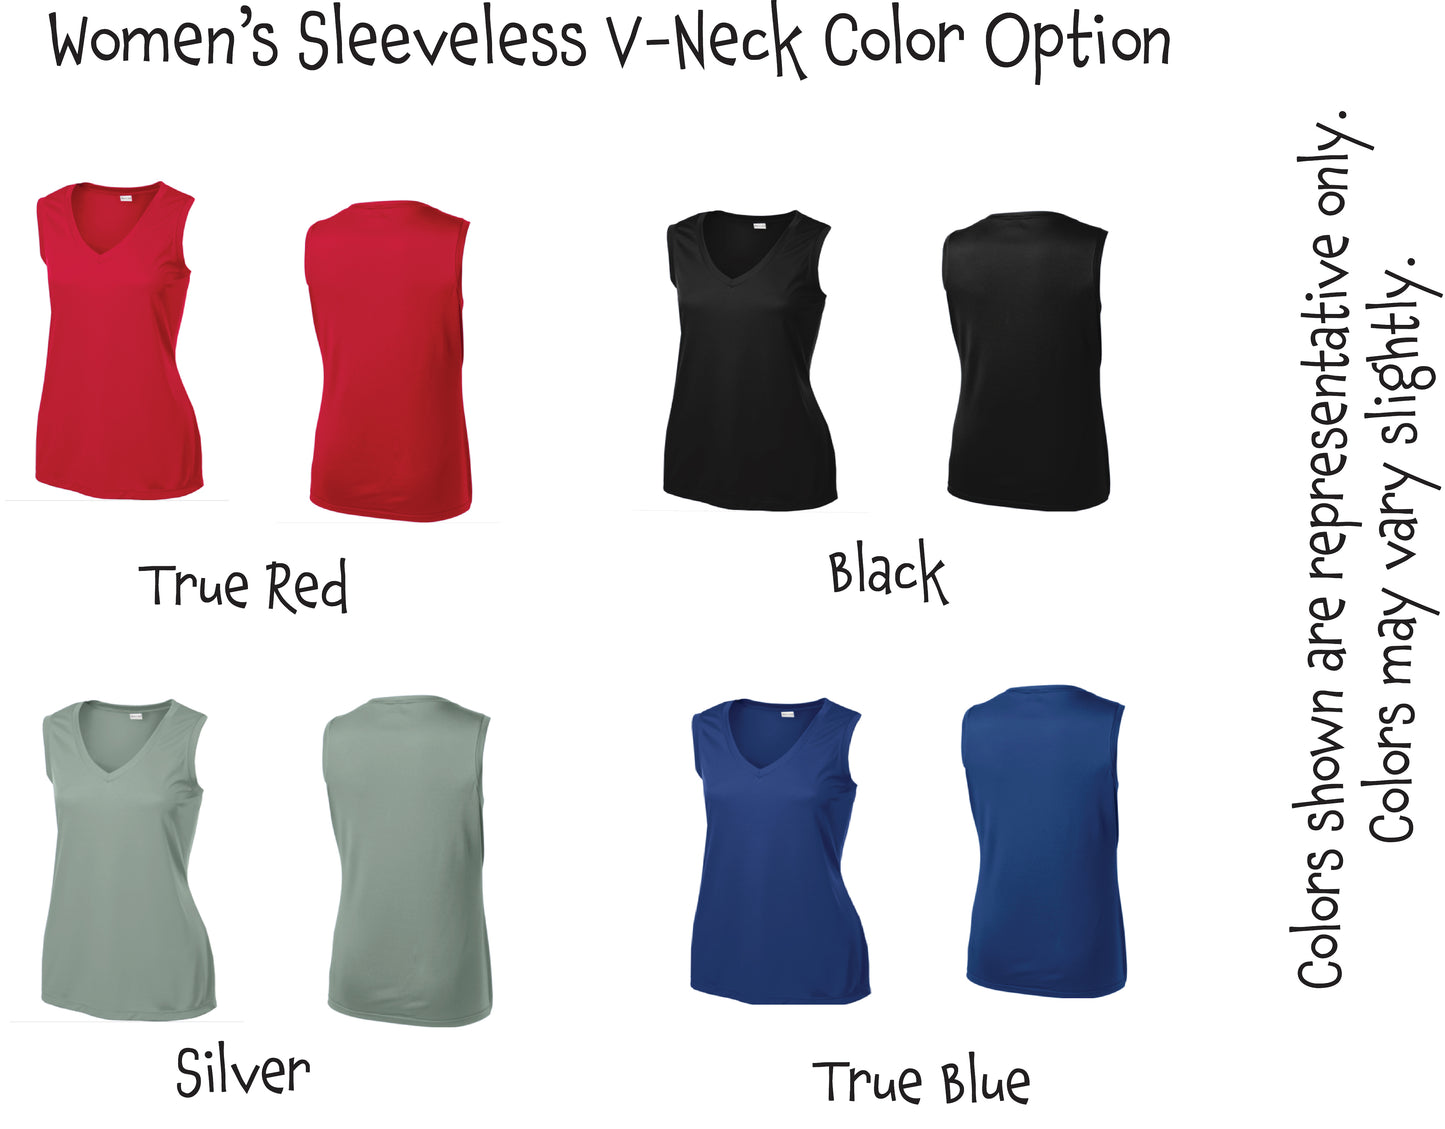 I Paint Lines | Women’s Sleeveless Athletic Shirt | 100% Polyester